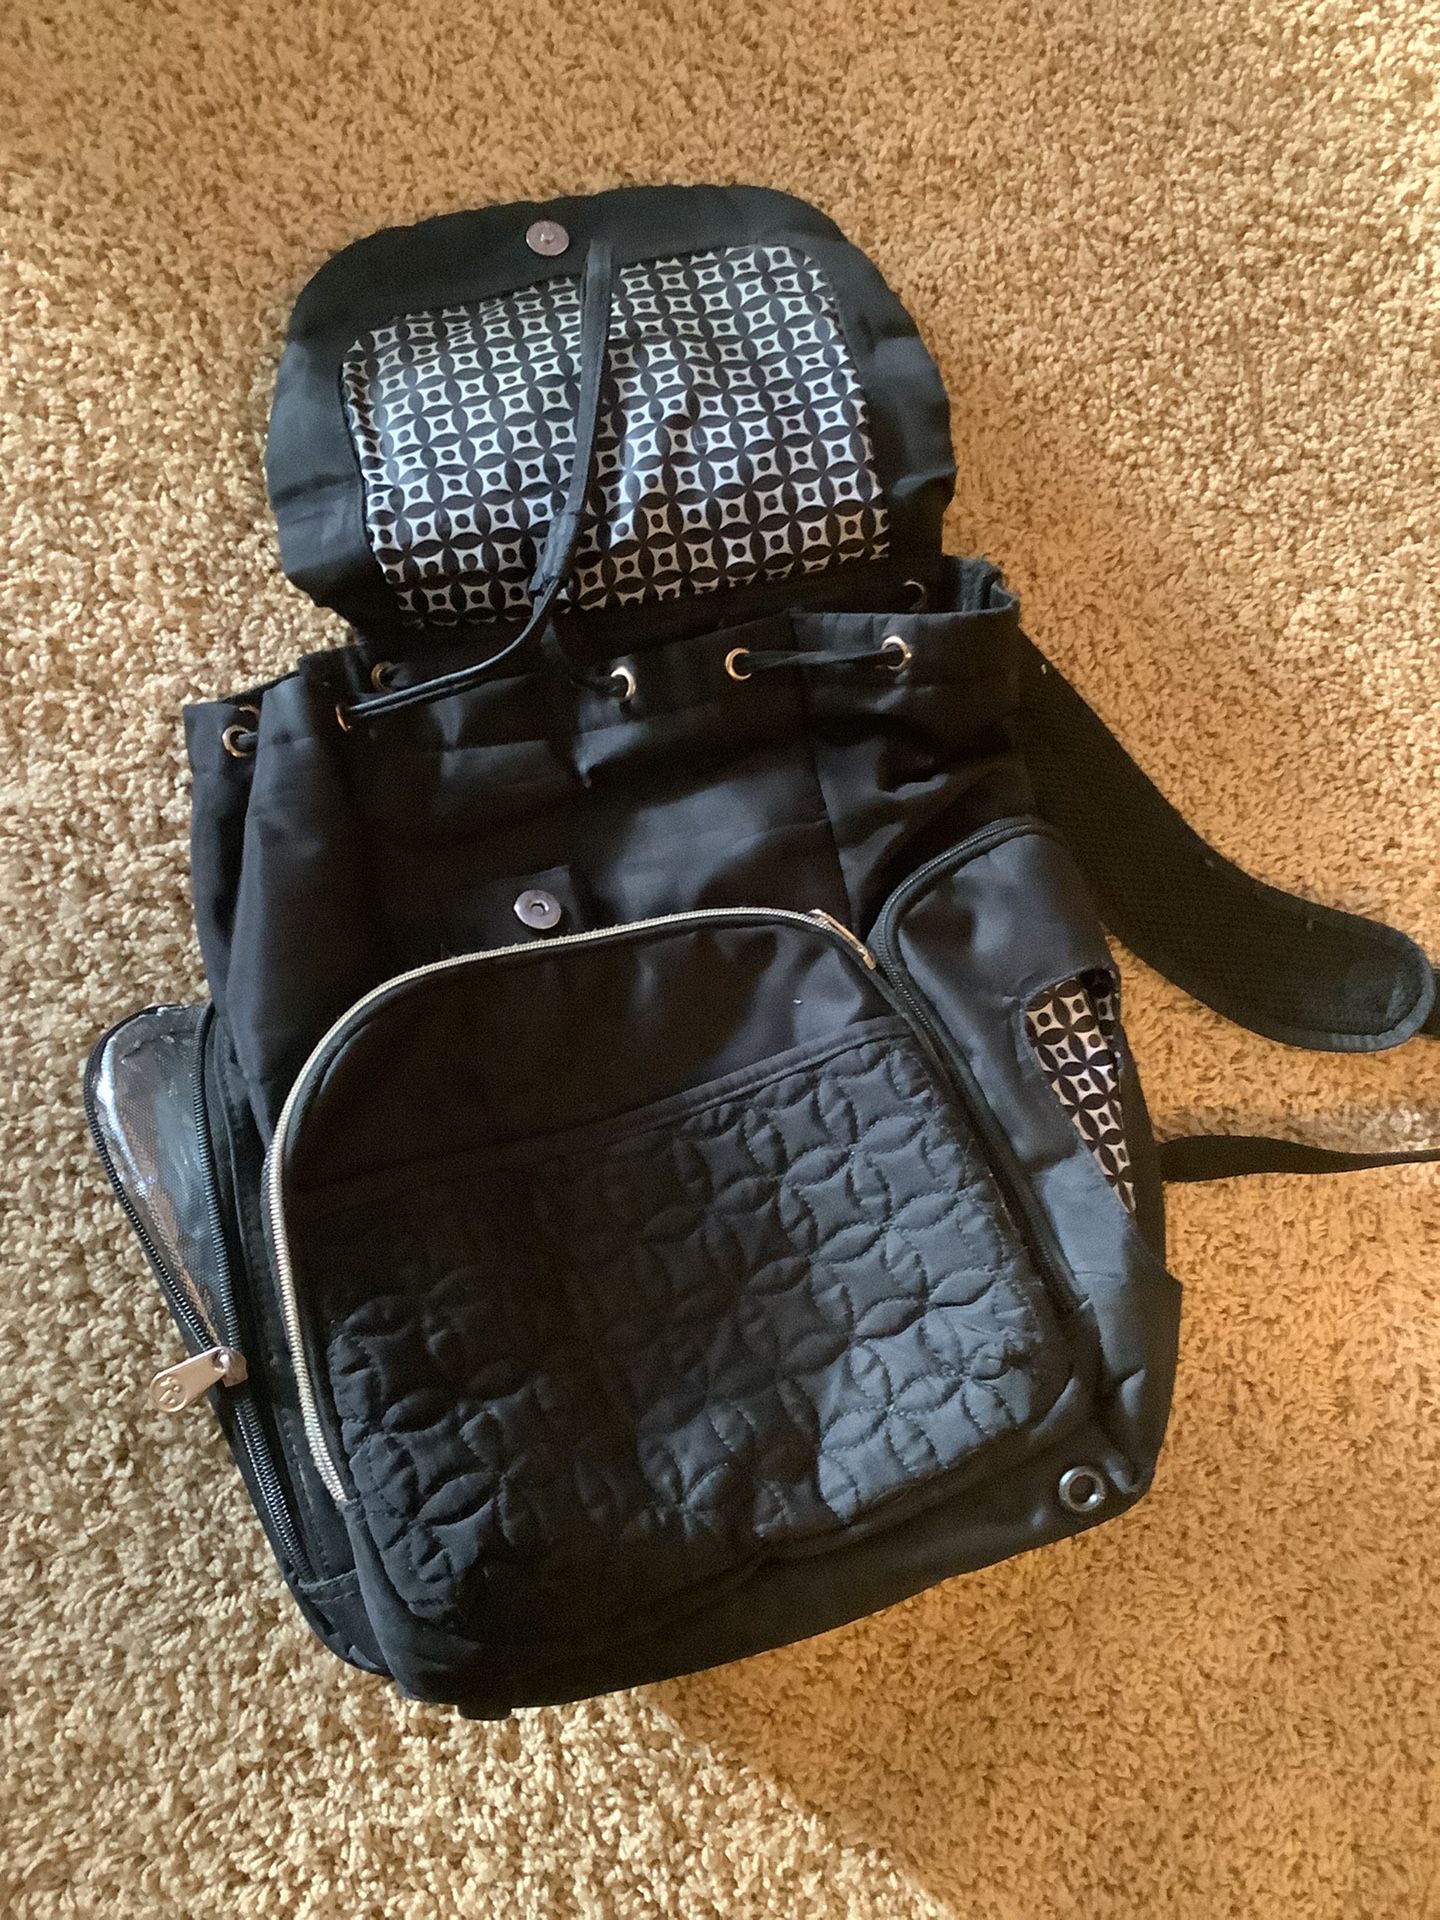 Fisher Price Diaper Bag Backpack